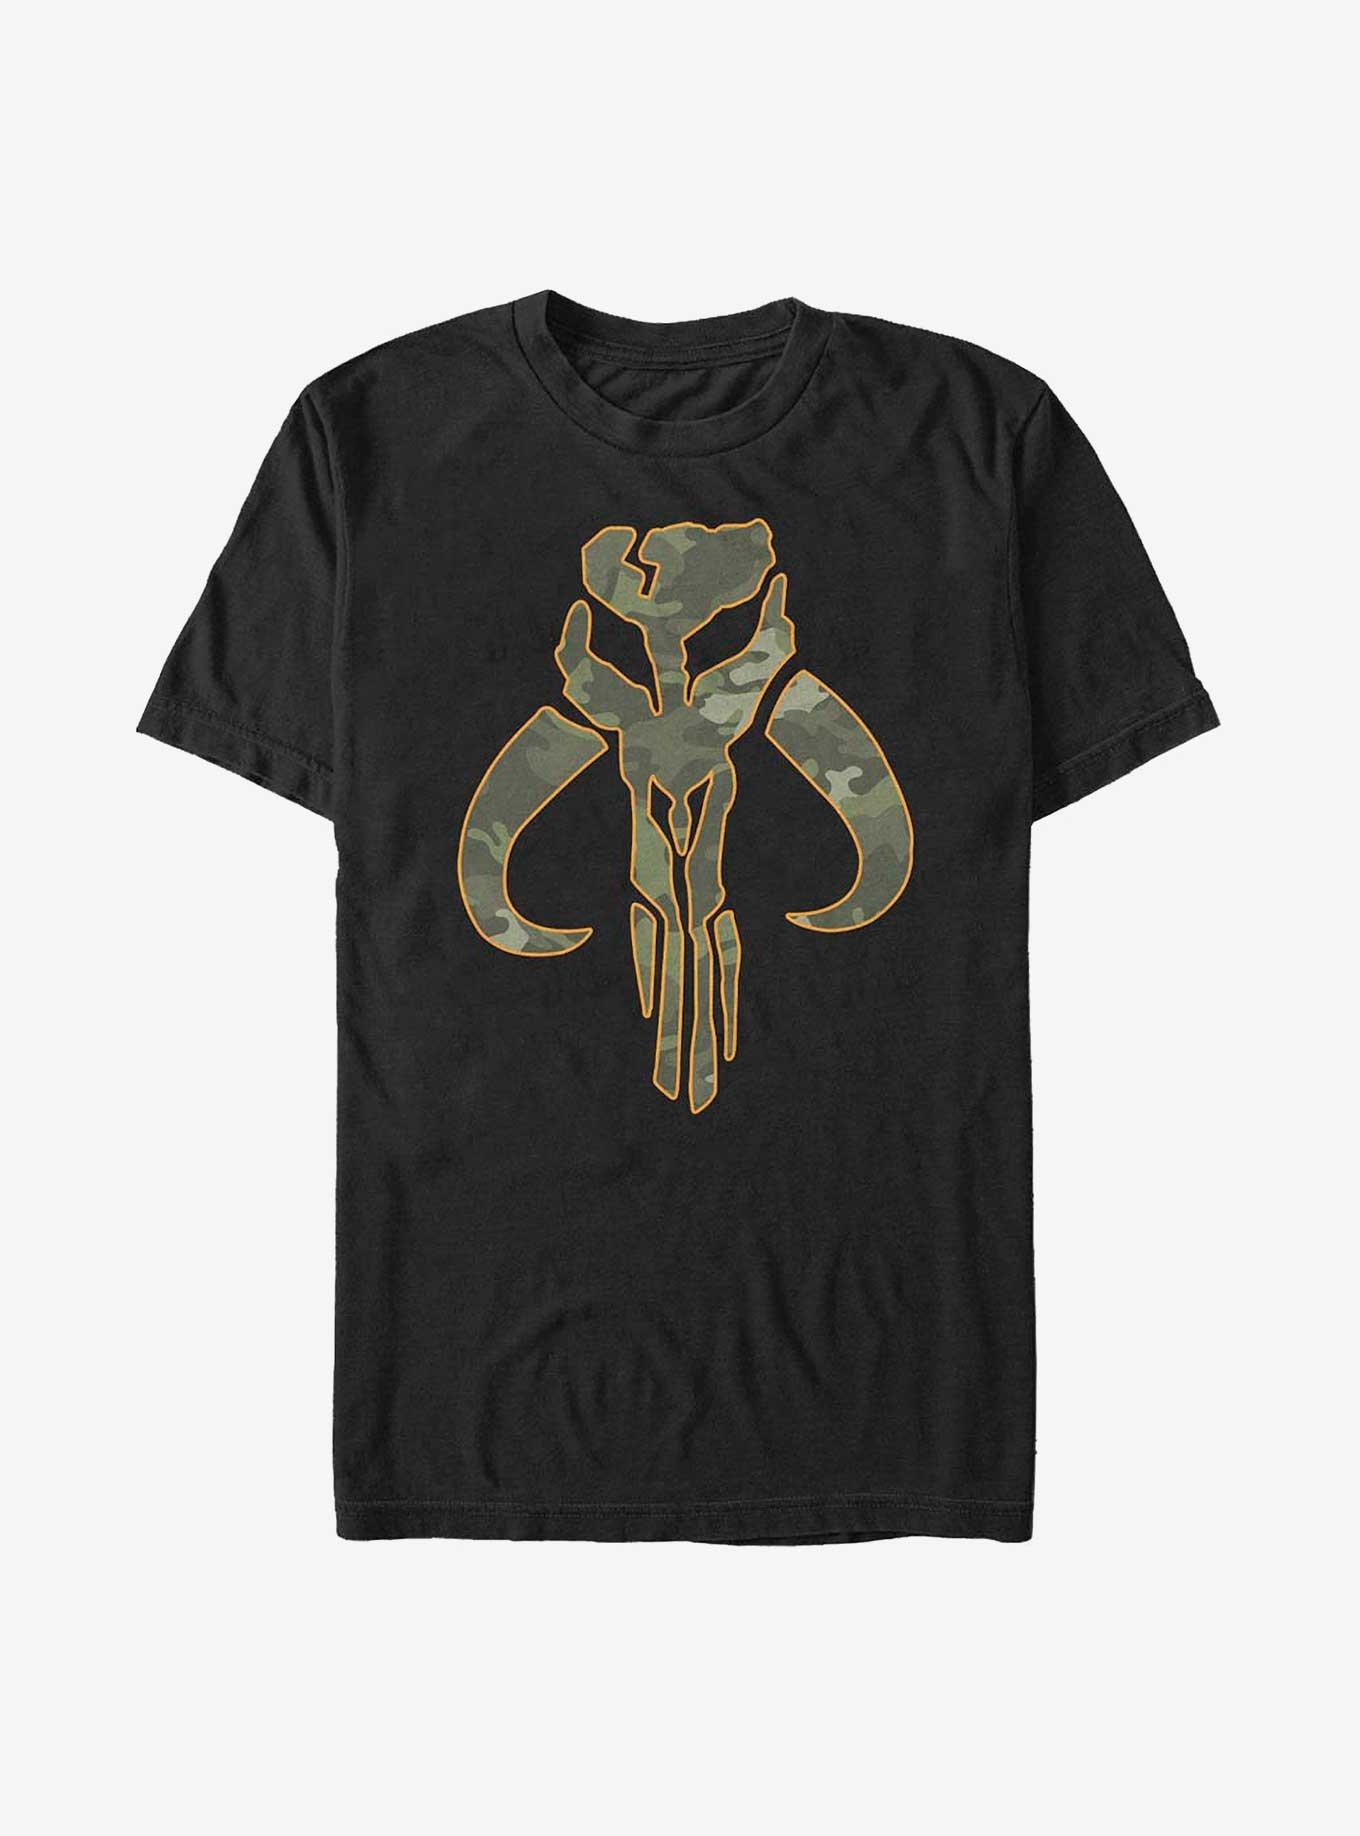 Star Wars Camo Skull T-Shirt